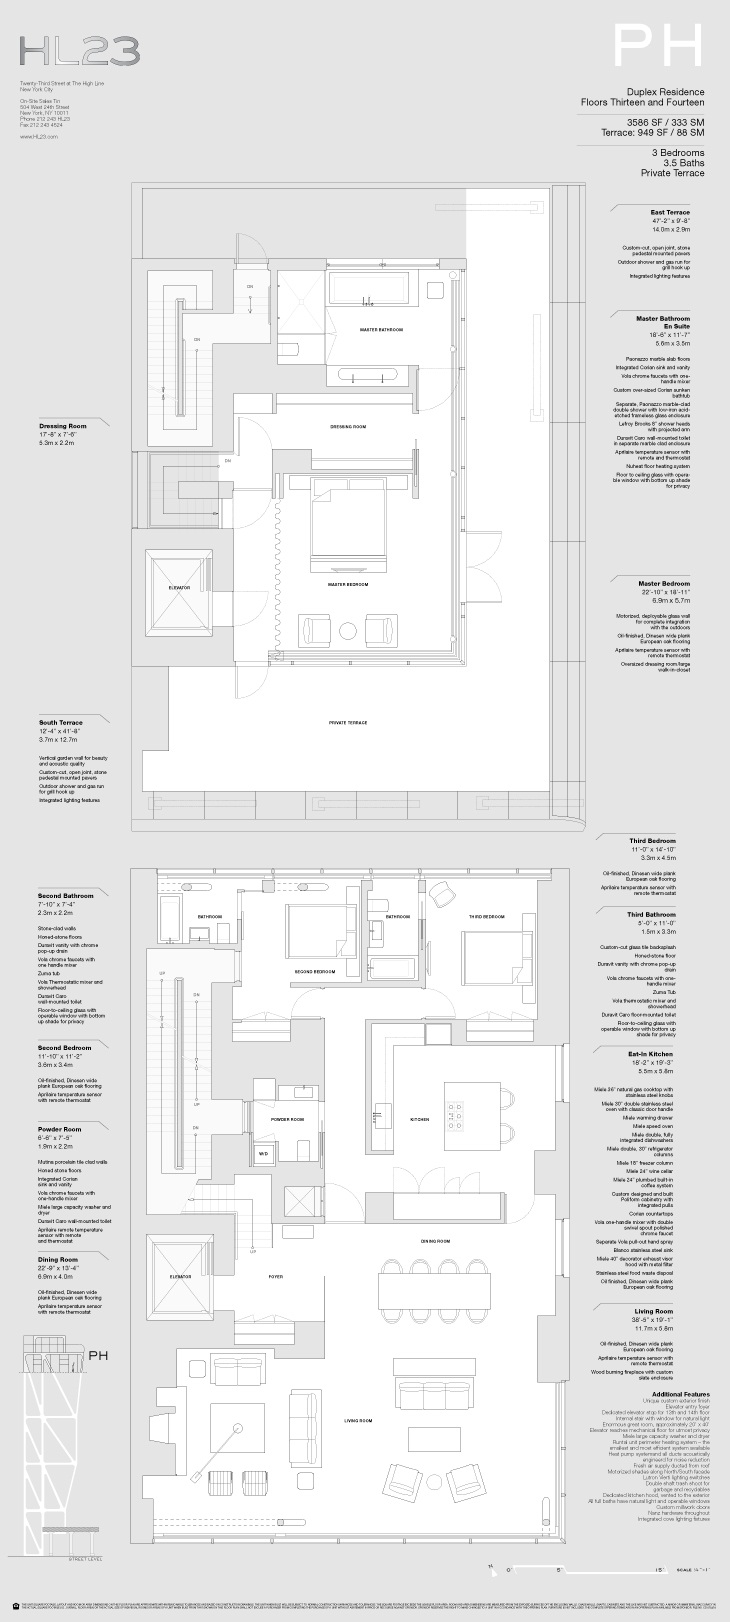 Archisearch - κάτοψη 13ου &14ου ορόφου - διόροφο διαμέρισμα (c) NMDA